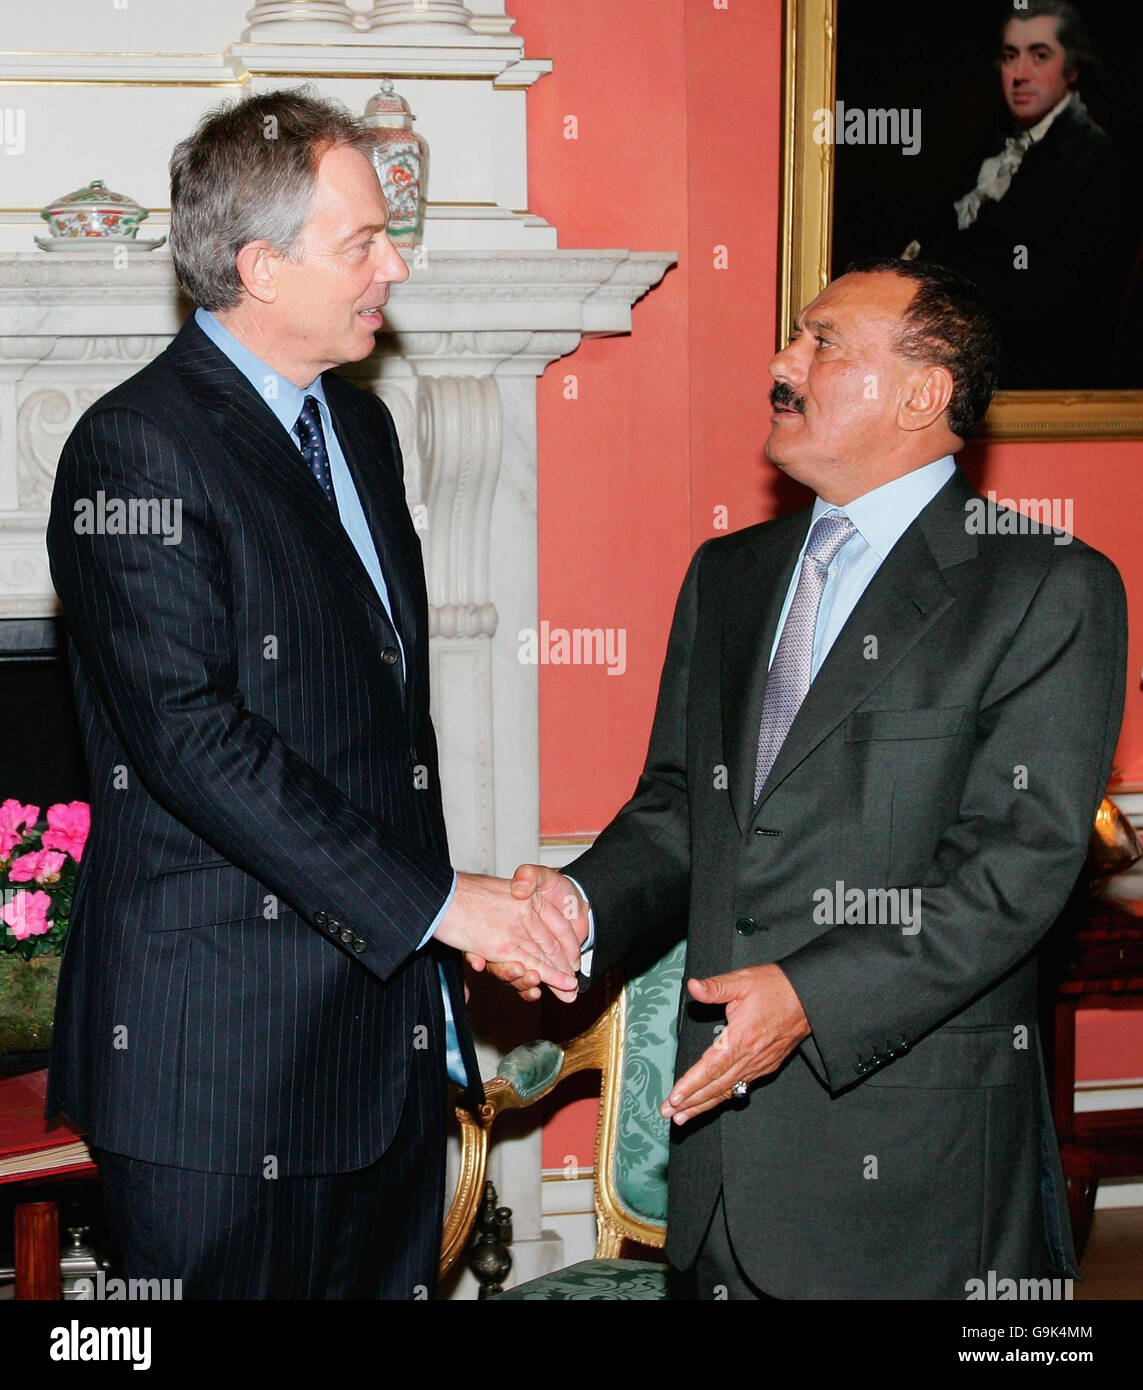 Tony Blair Meets Yemeni Prime Minister Stock Photo